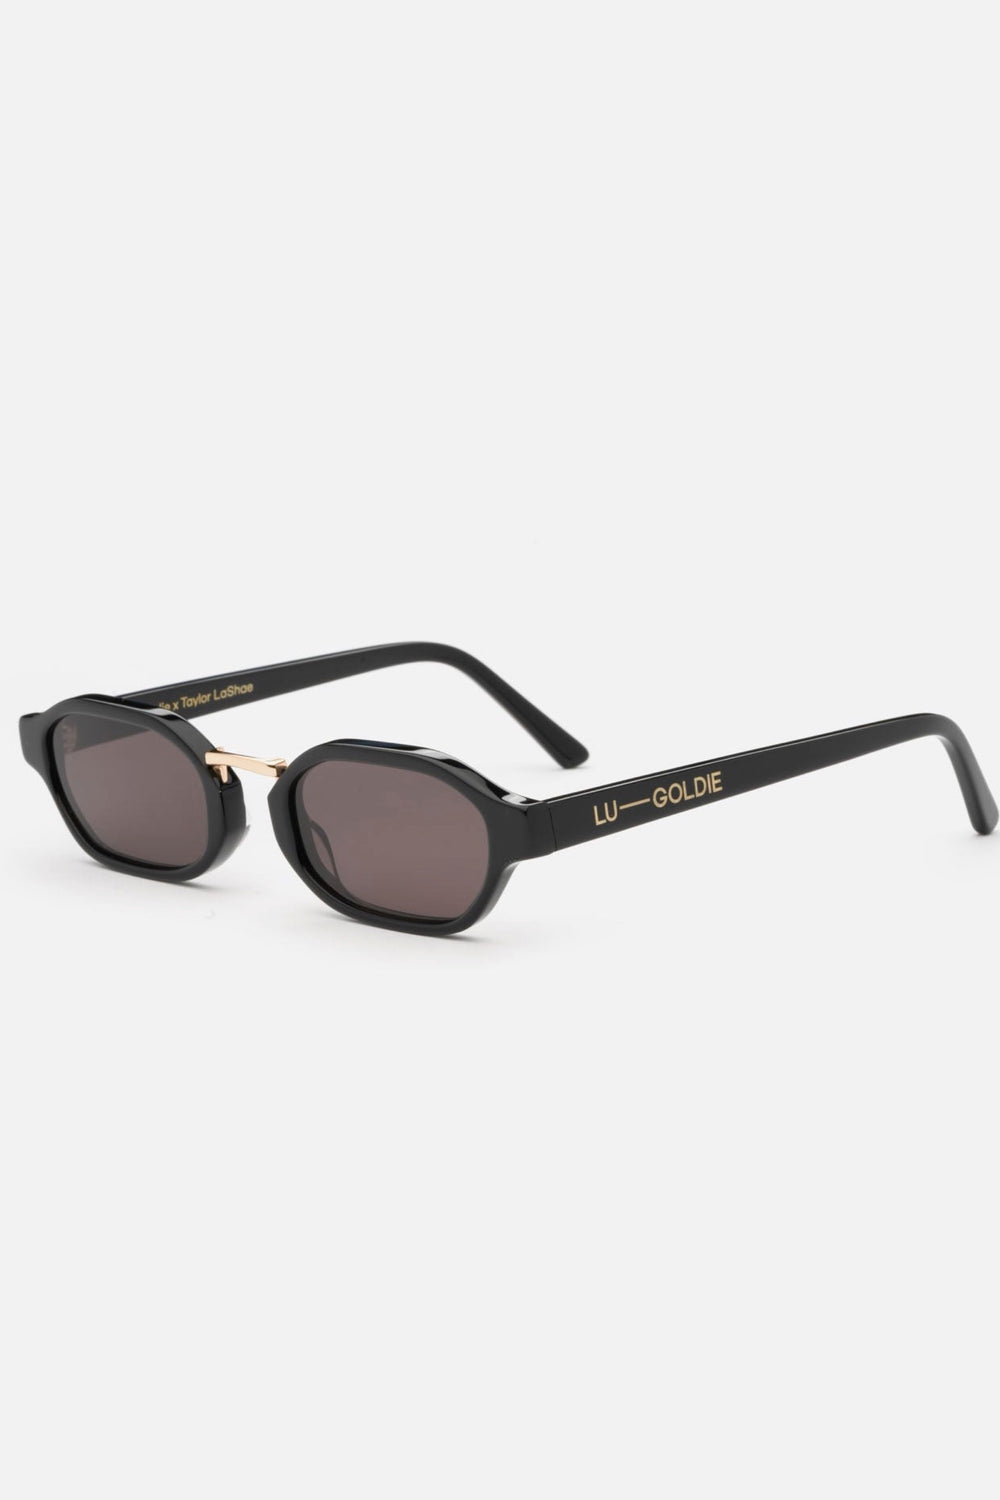 Black TL05 Sunglasses